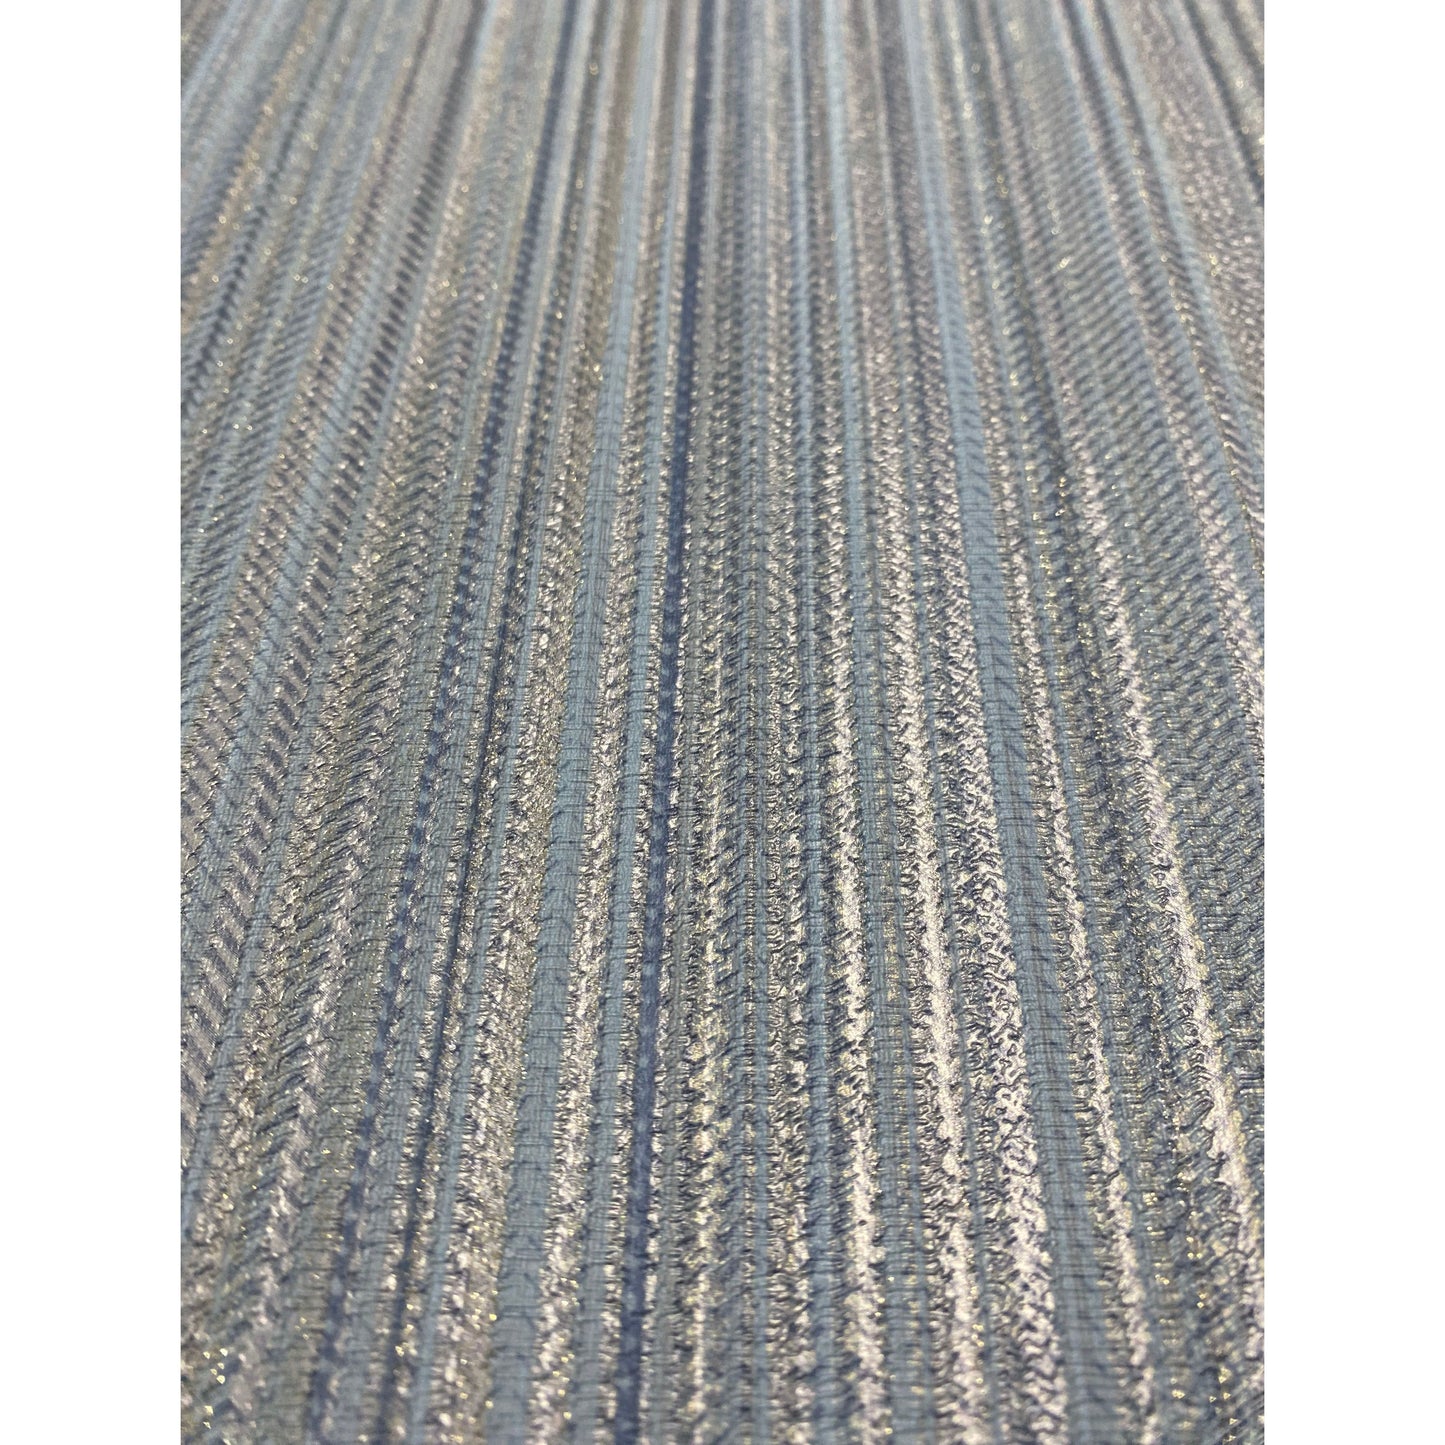 Muriva Venezia Stripe Blue Wallpaper (M66501)